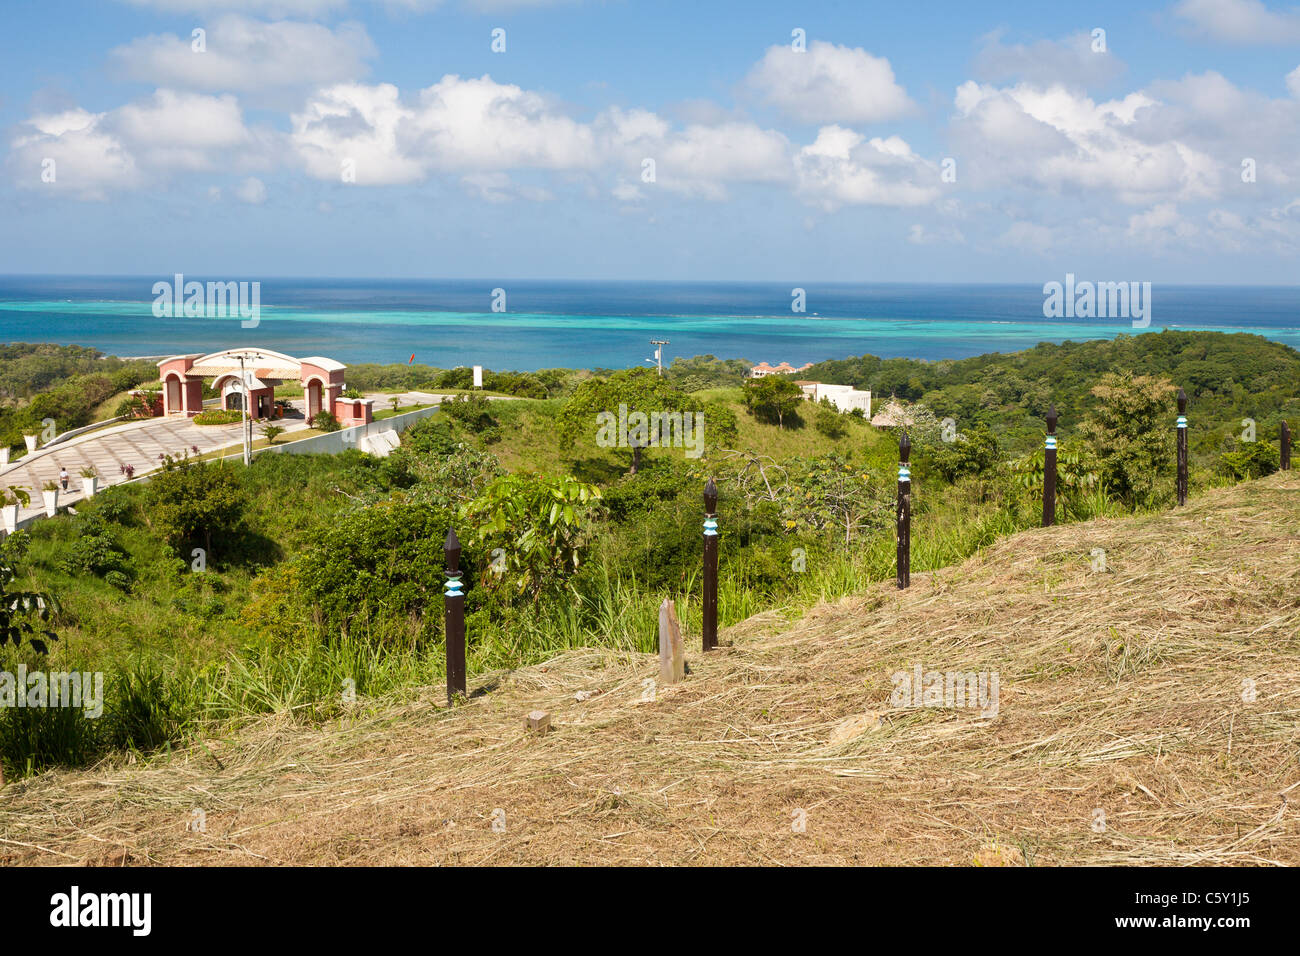 Entrance road to gated resort overlooking Caribbean Sea on the island of Roatan, in Honduras Stock Photo